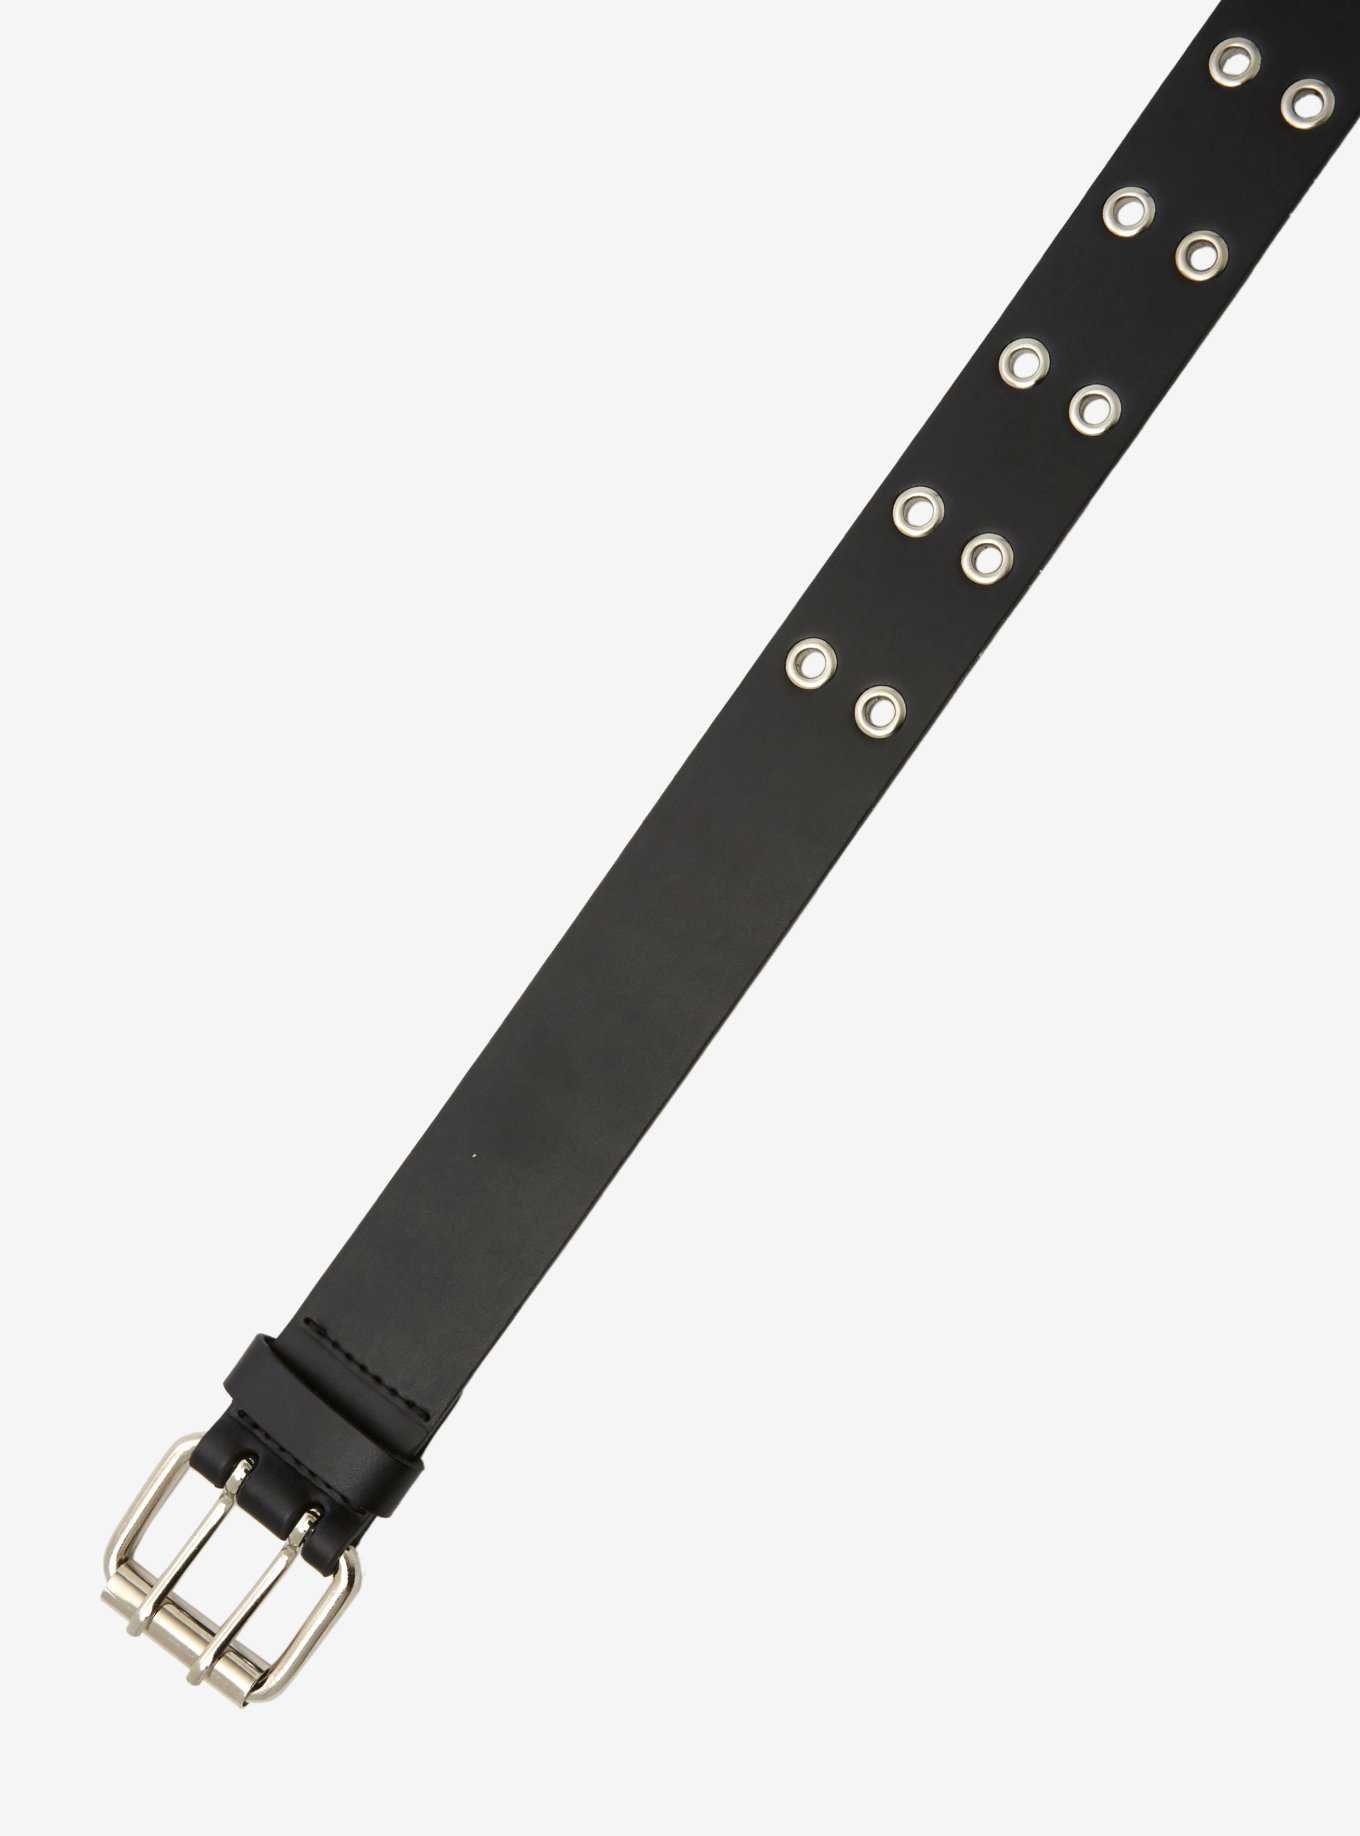 Black Faux Leather Grommet Belt, , hi-res